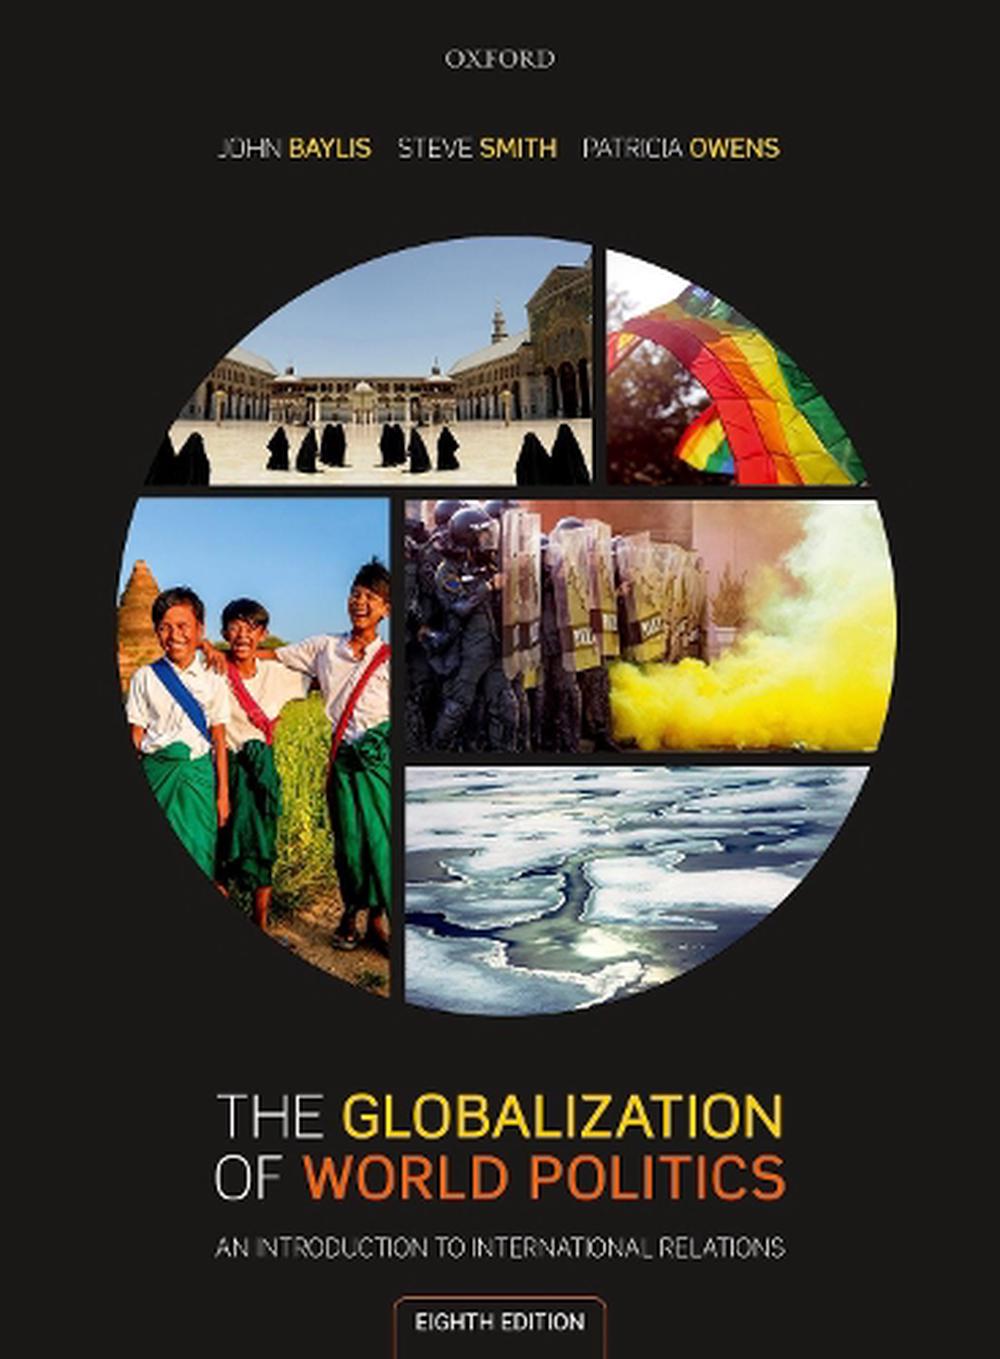 Globalization of World Politics, 8th Edition by John Baylis, Paperback, 9780198825548 Buy